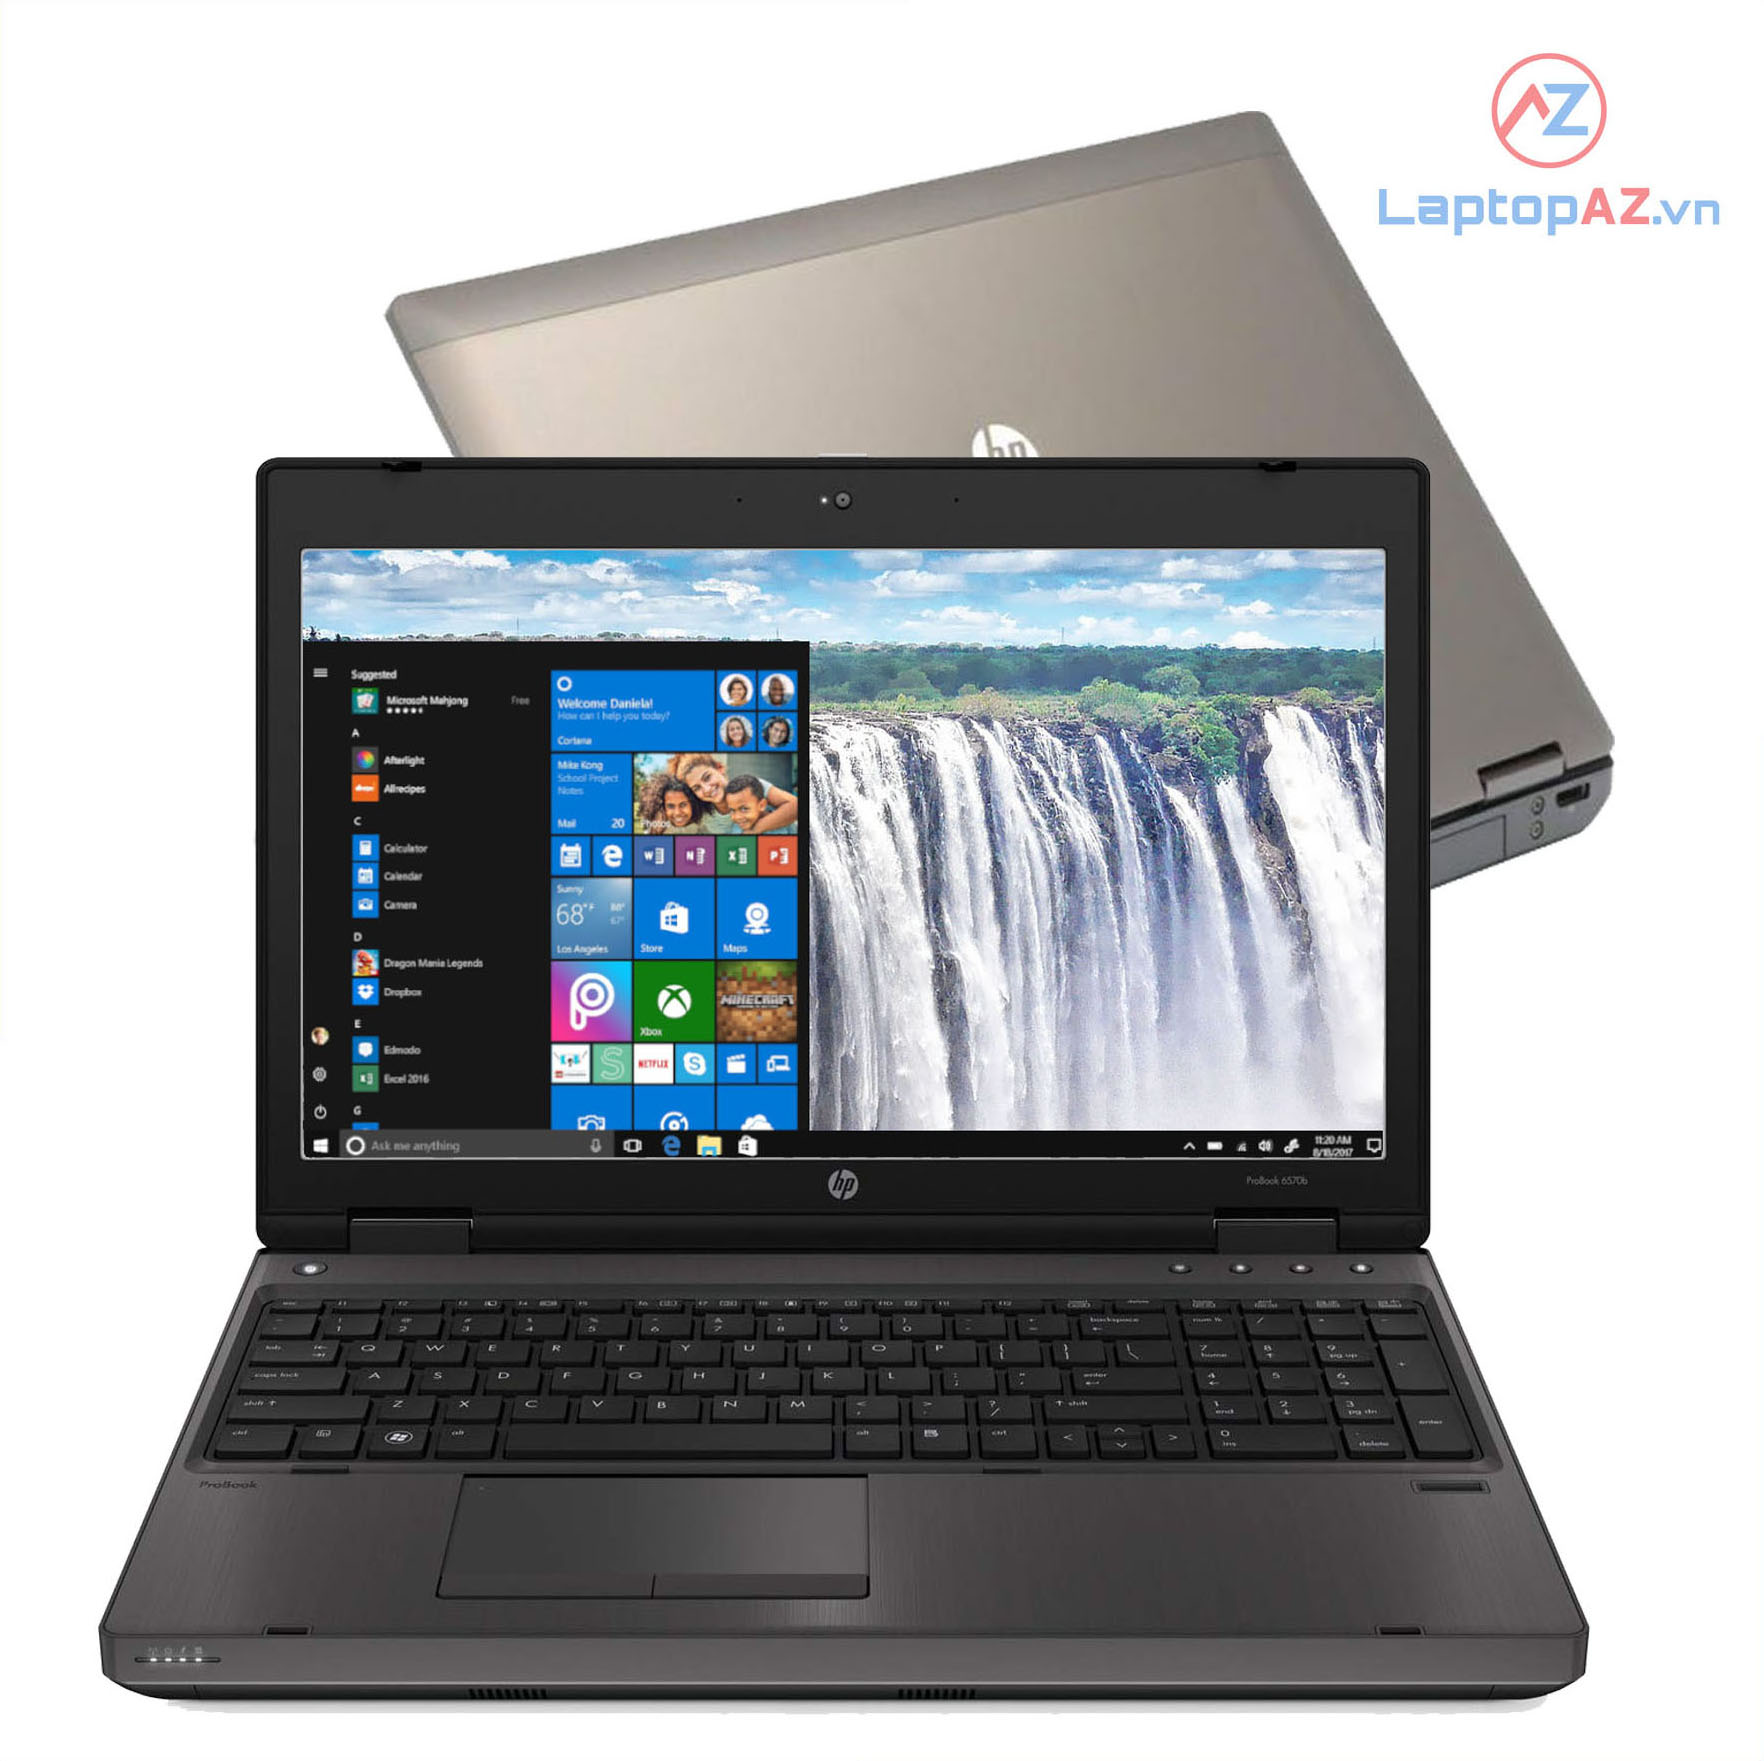 Laptop HP Probook 6570b (Core i5-3210M, 4GB, 250GB, VGA intel HD Graphics 4000, 15.6 inch)